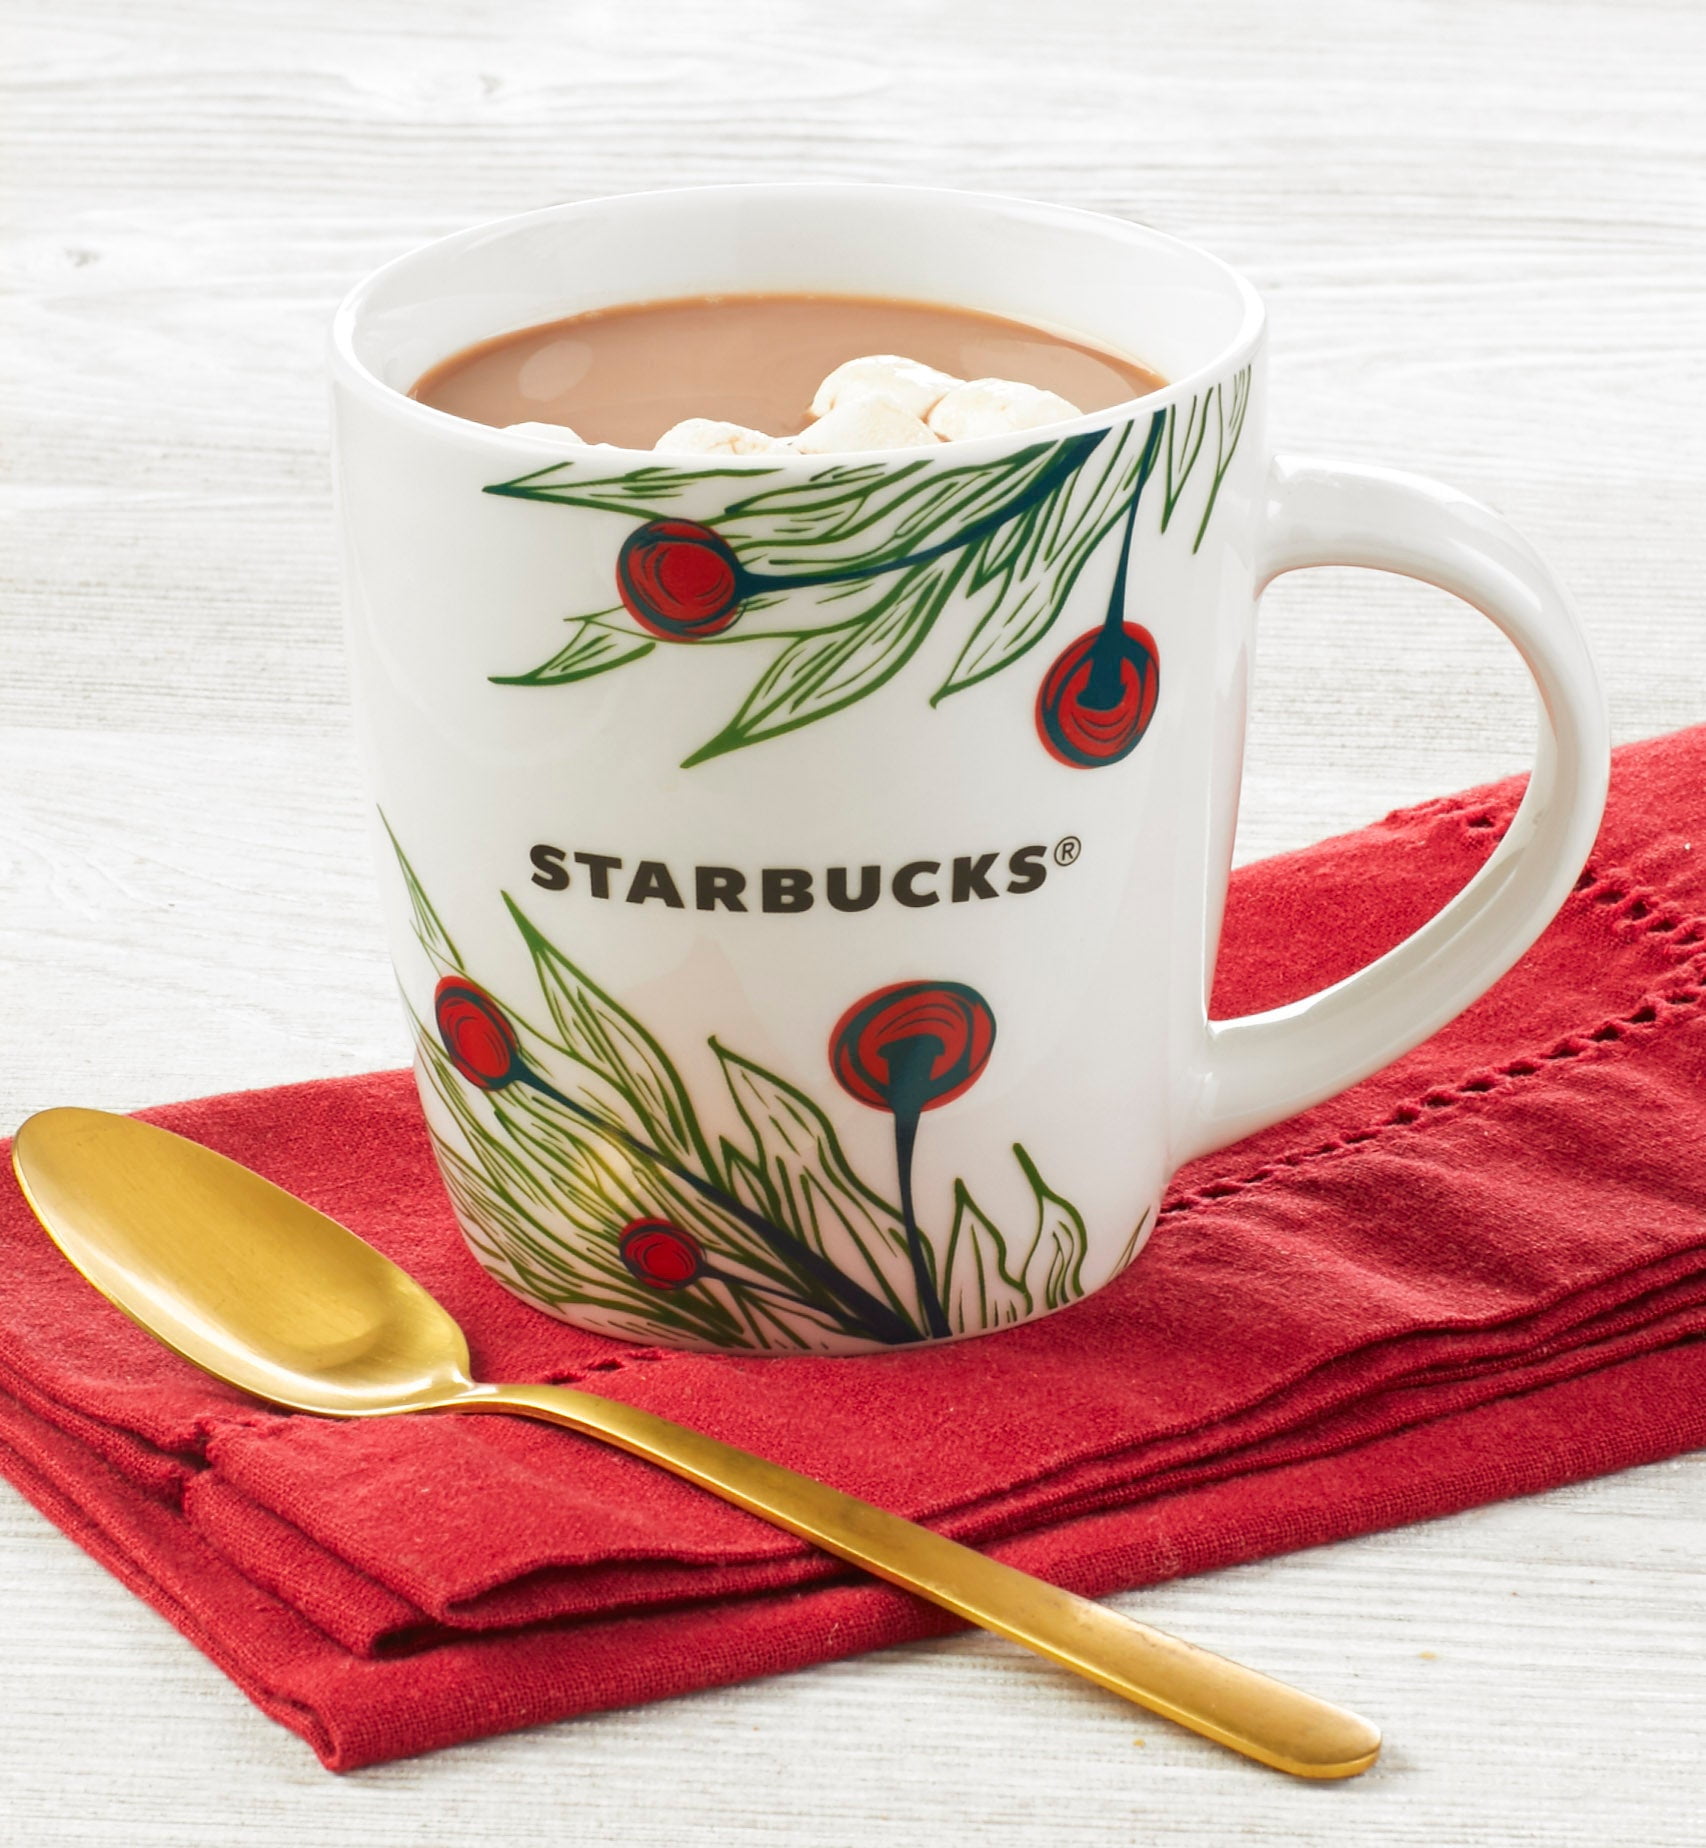 Home & Away Stoneware Mug, Hot Cocoa, and Coffee Gift Set, Includes Travel  and Ceramic Mug